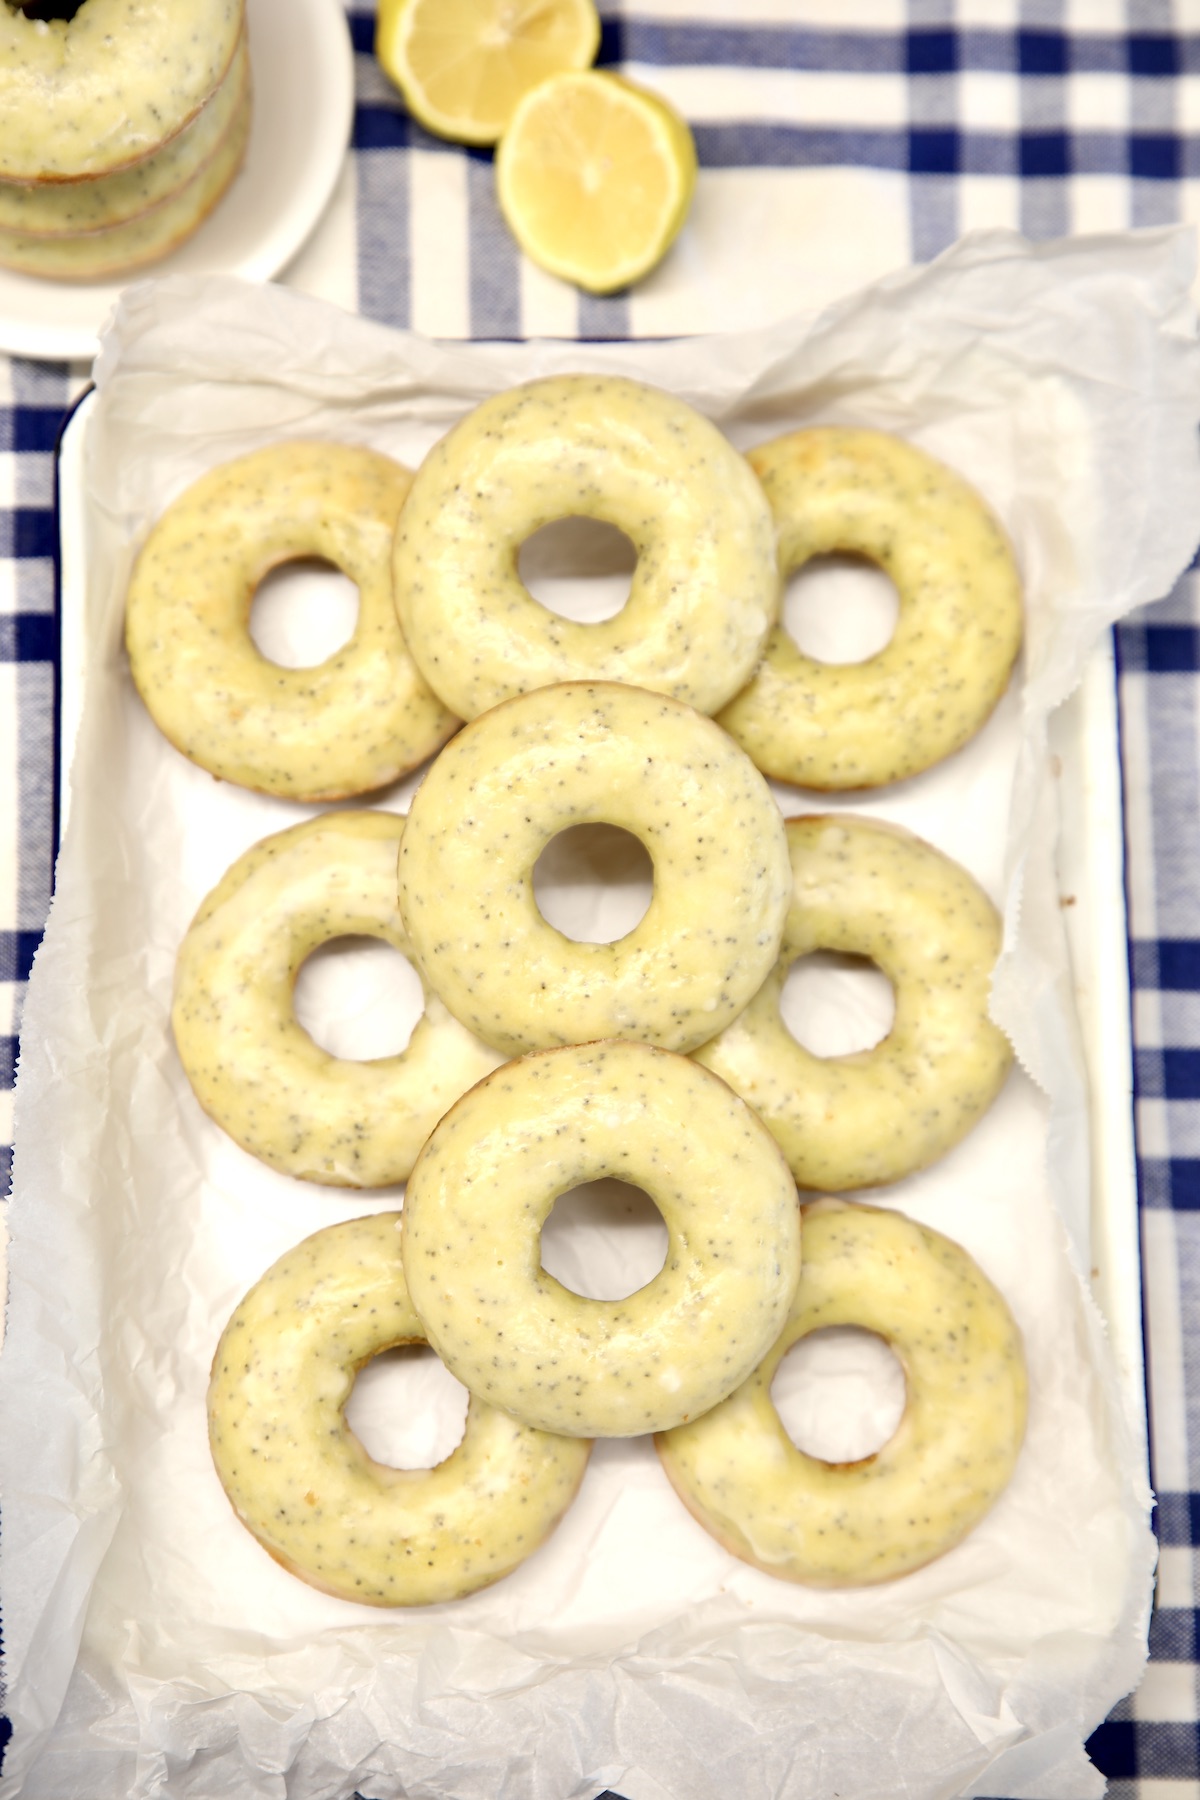 Lemon poppy seed donuts on a tray.